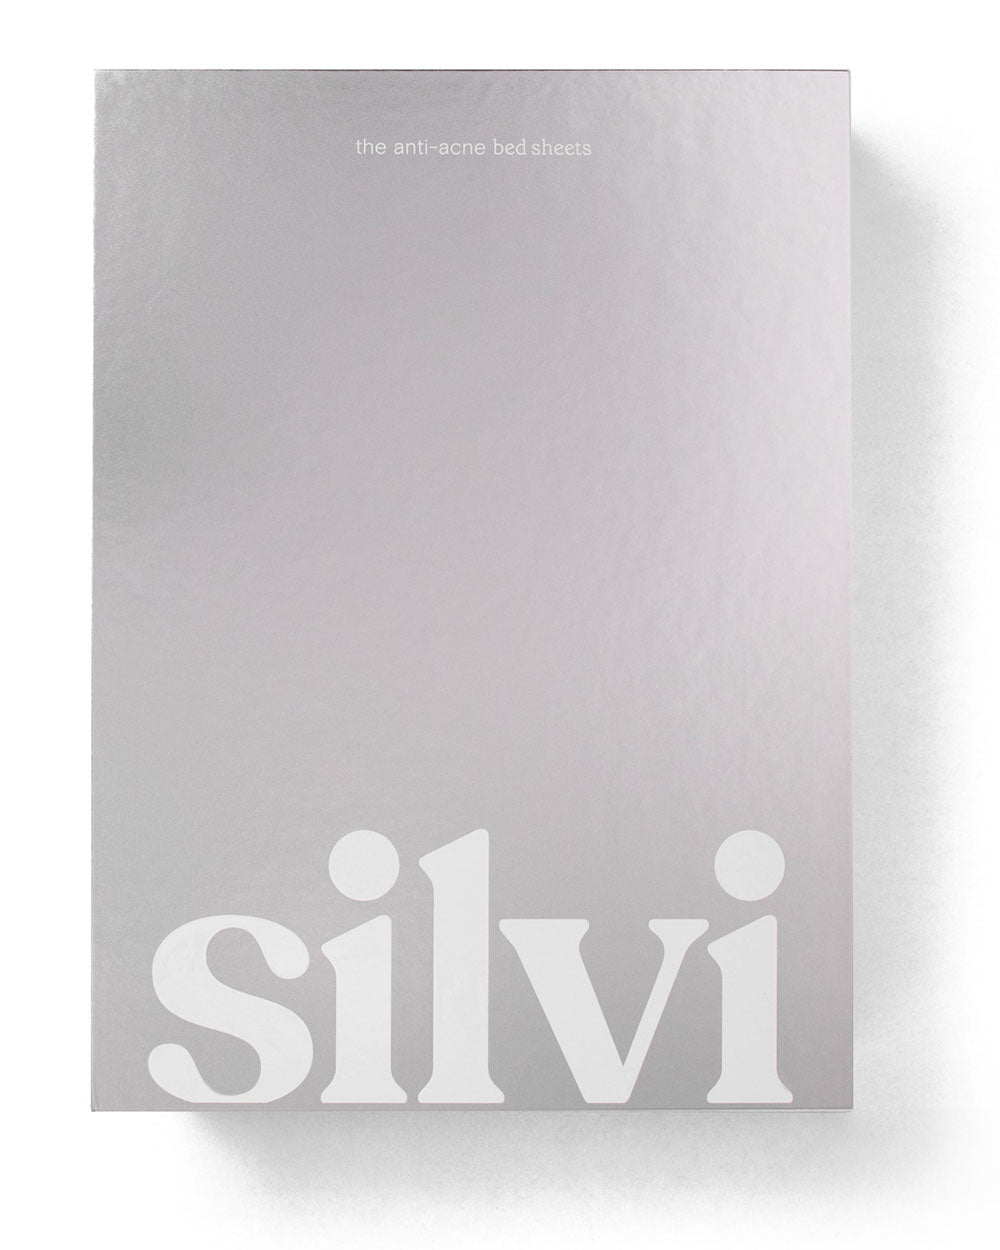 Silvi Sheet Set & Two Pillowcases (Save 25%)